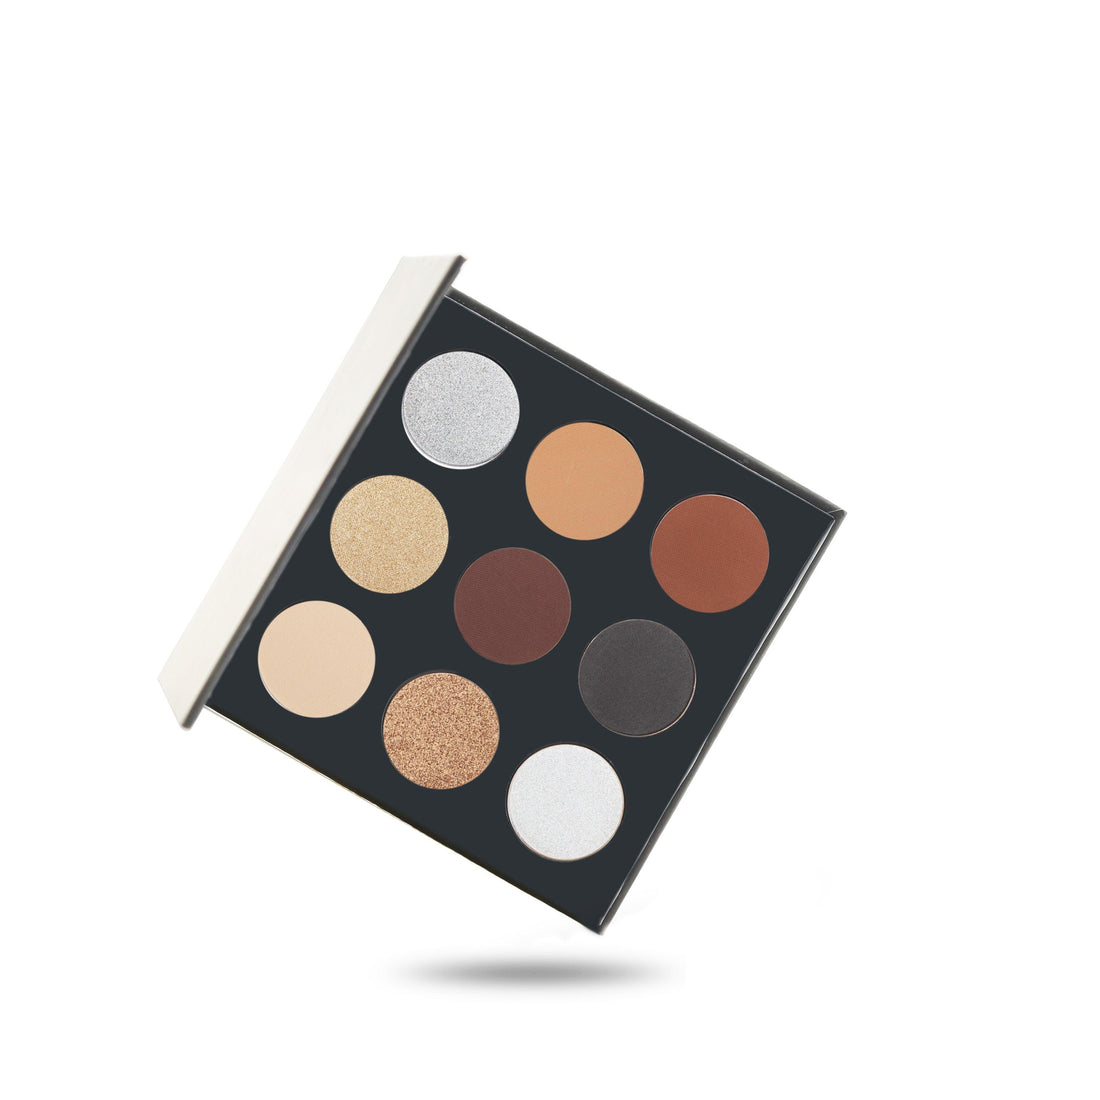 Serendipity eyeshadow palette - Makeup Palette Pro